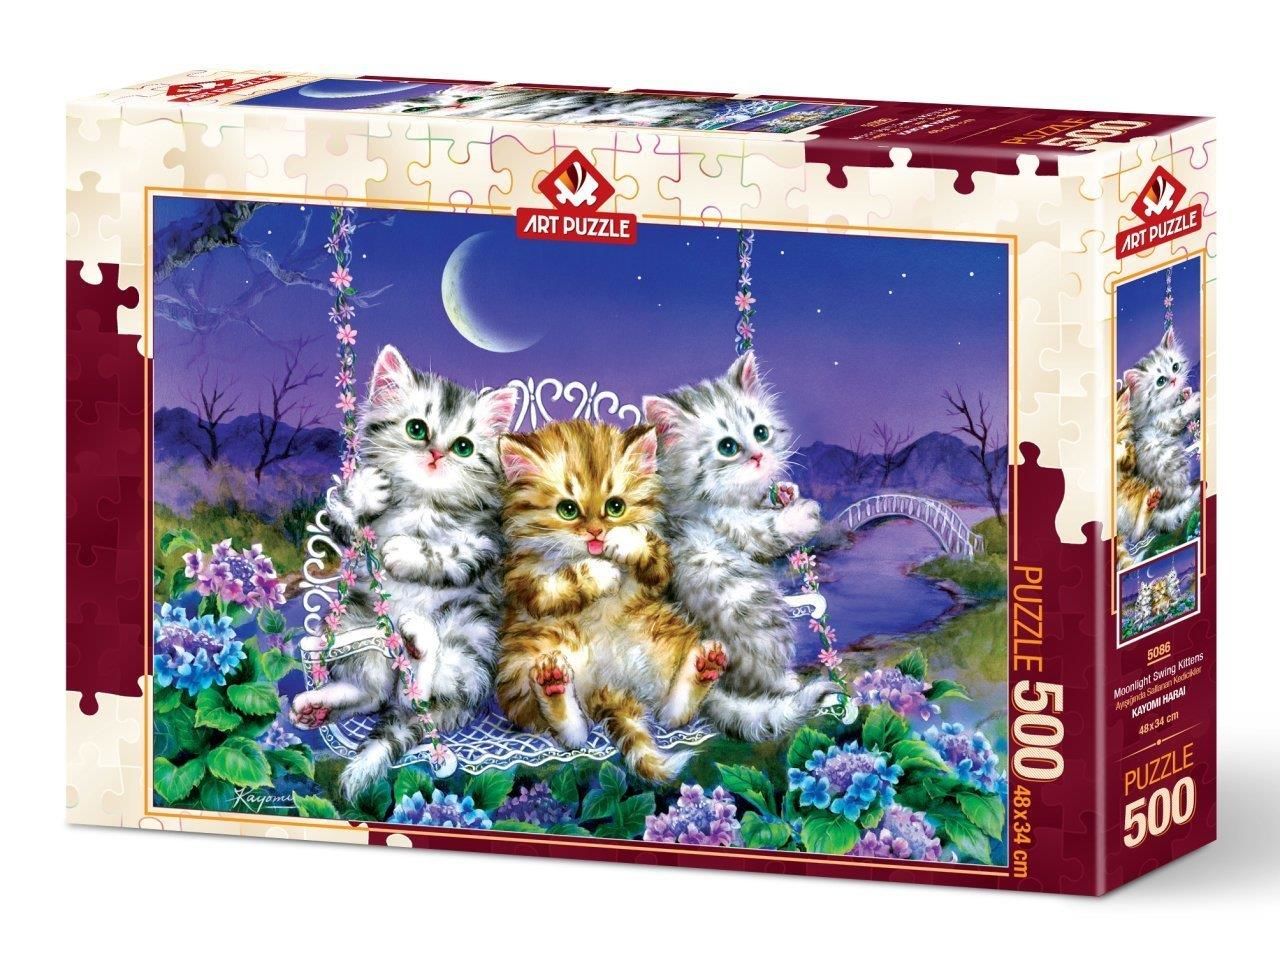 Art Puzzle Ayışığında Sallanan Kedicikler 500 Parça Puzzle